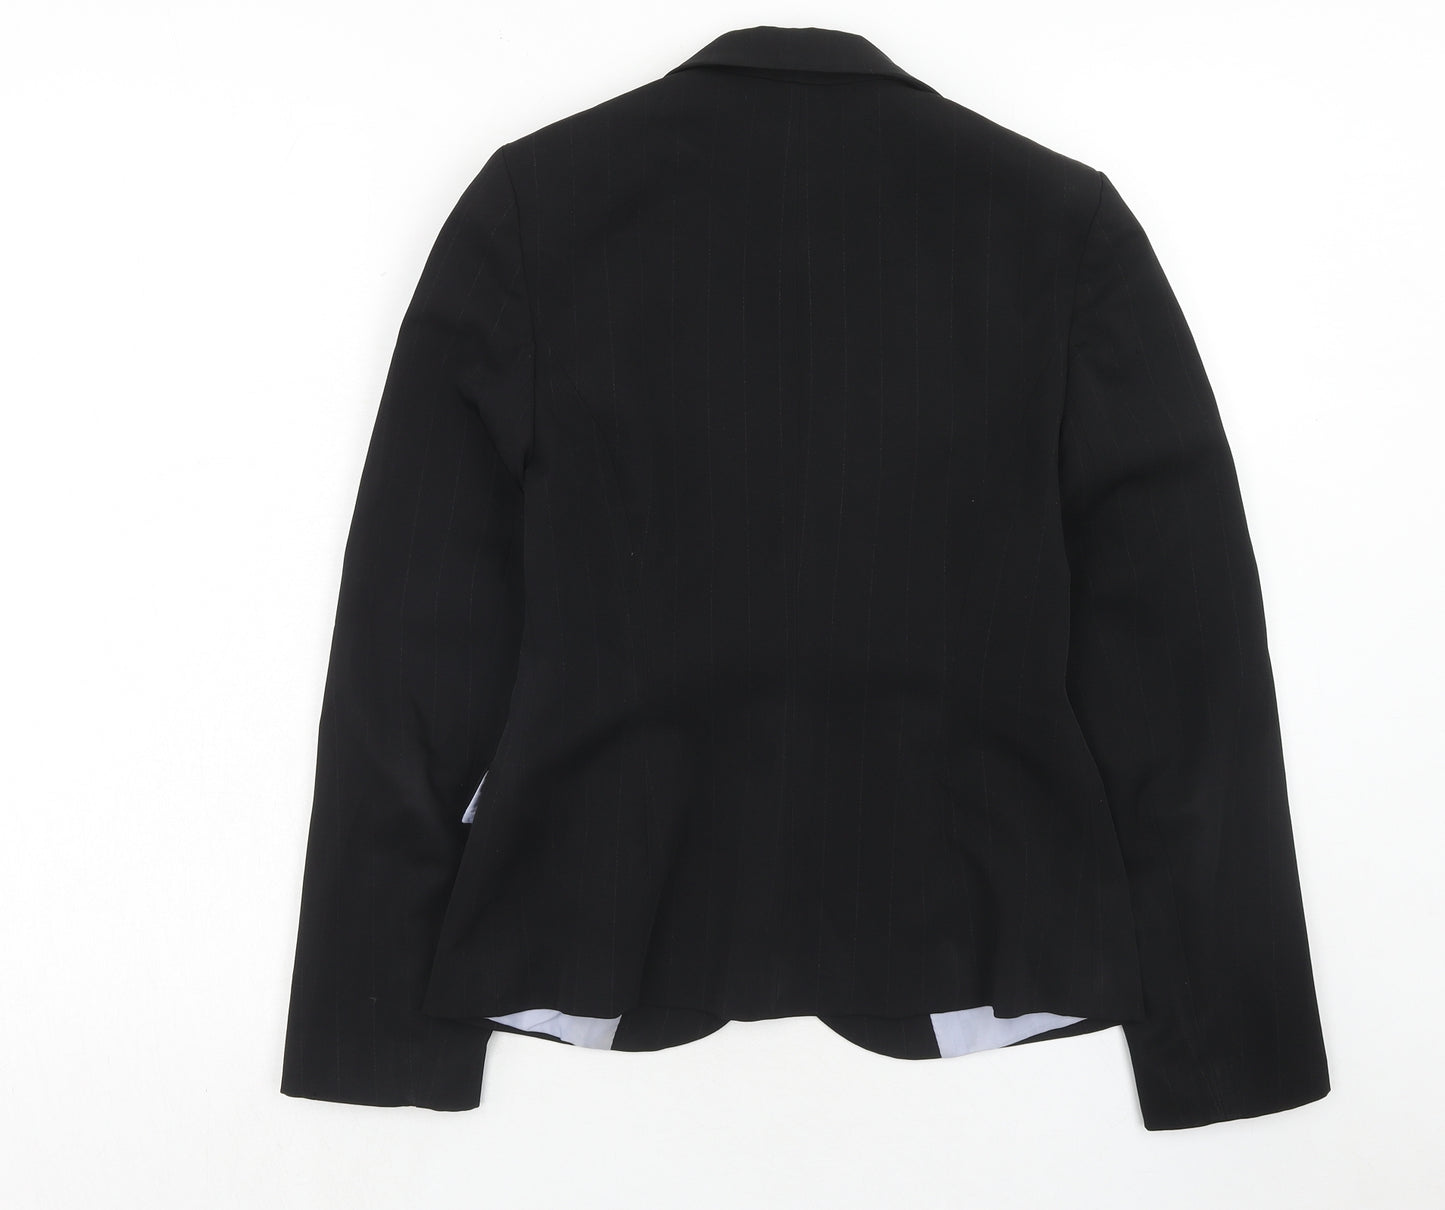 Bay Womens Black Polyester Jacket Suit Jacket Size 10